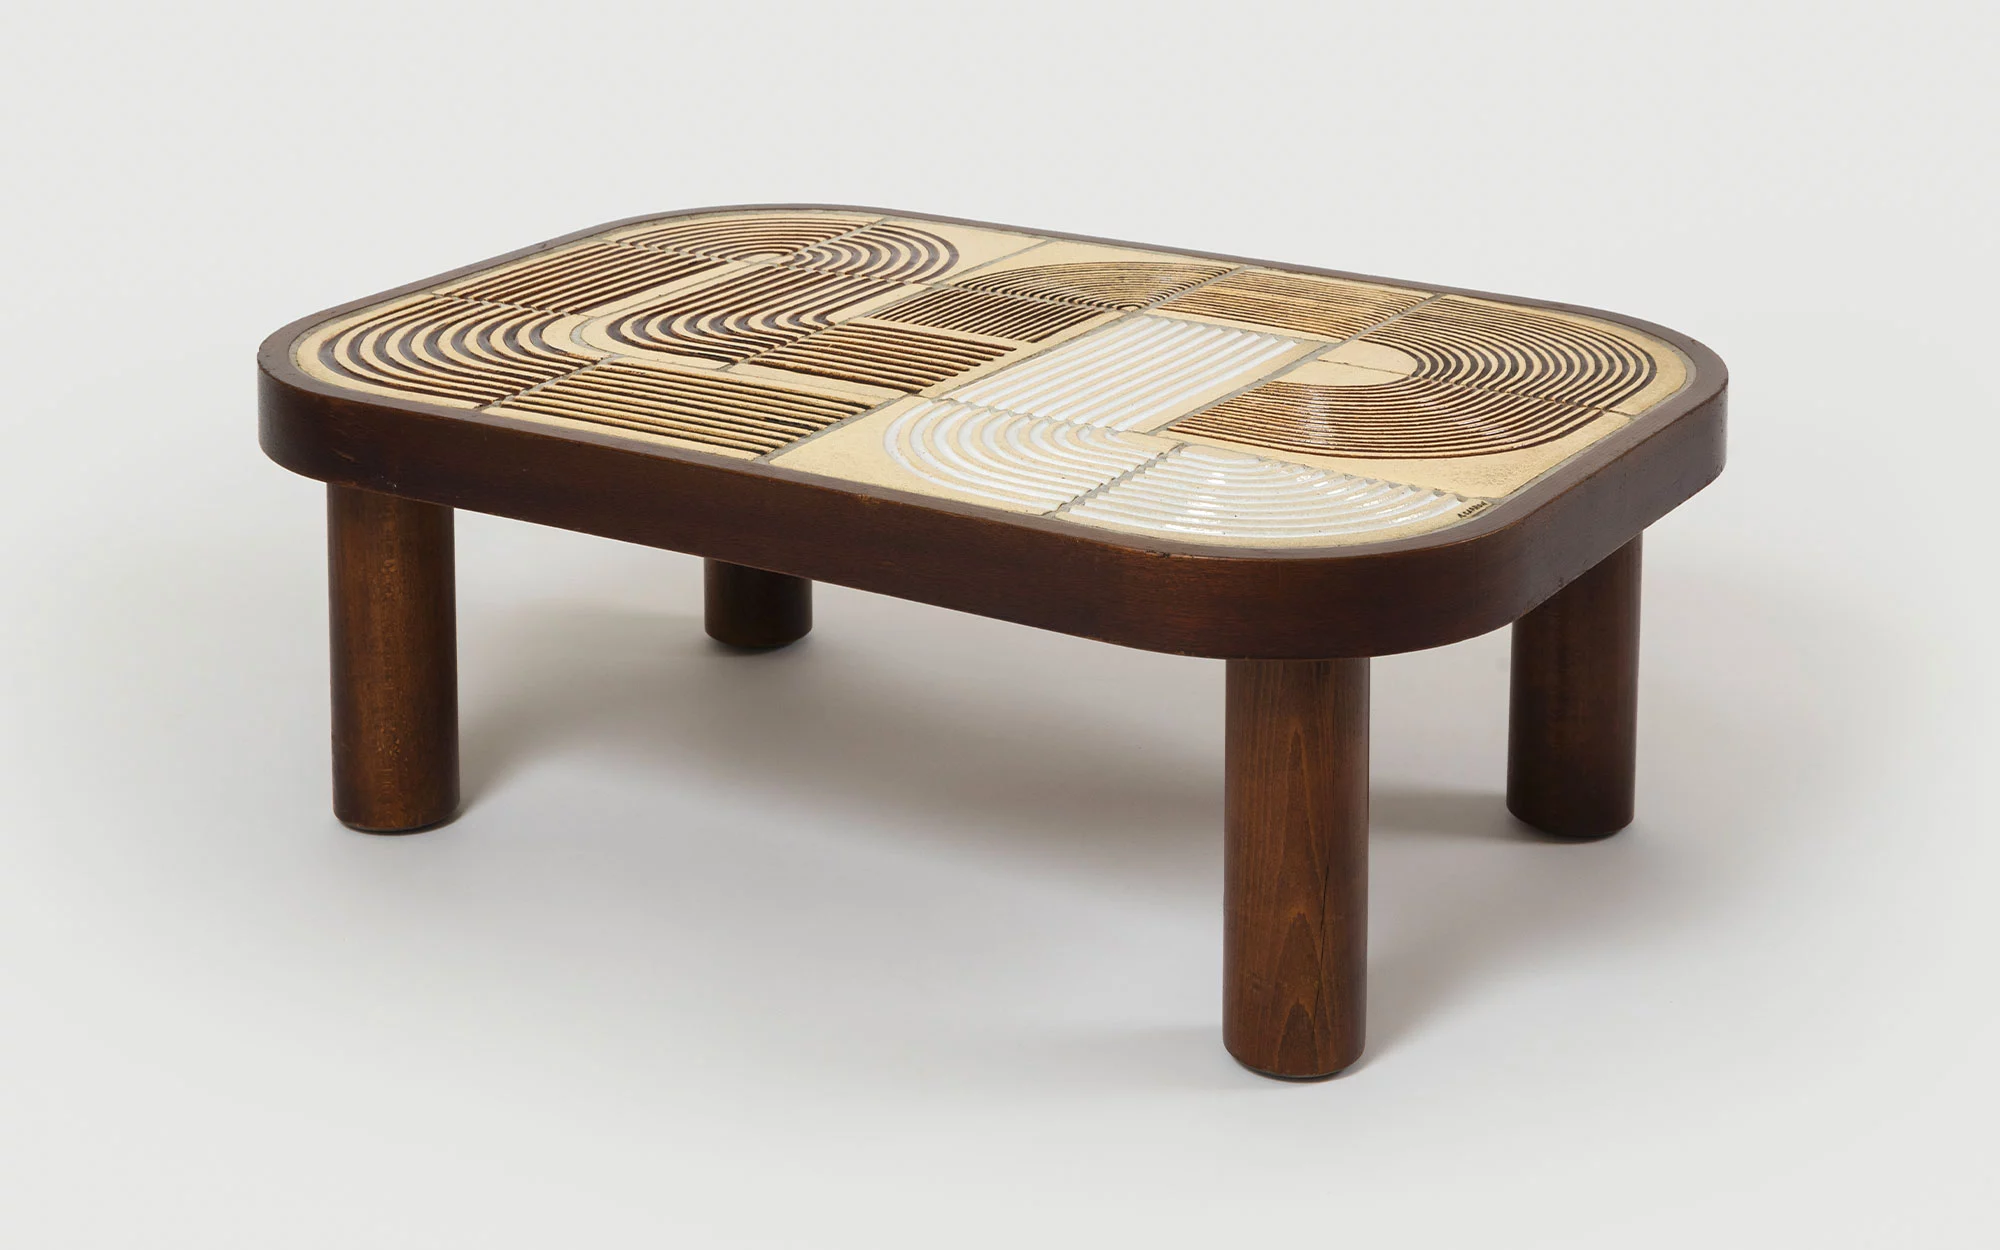 Tables basse Shogun - Roger Capron - Coffee table - Galerie kreo